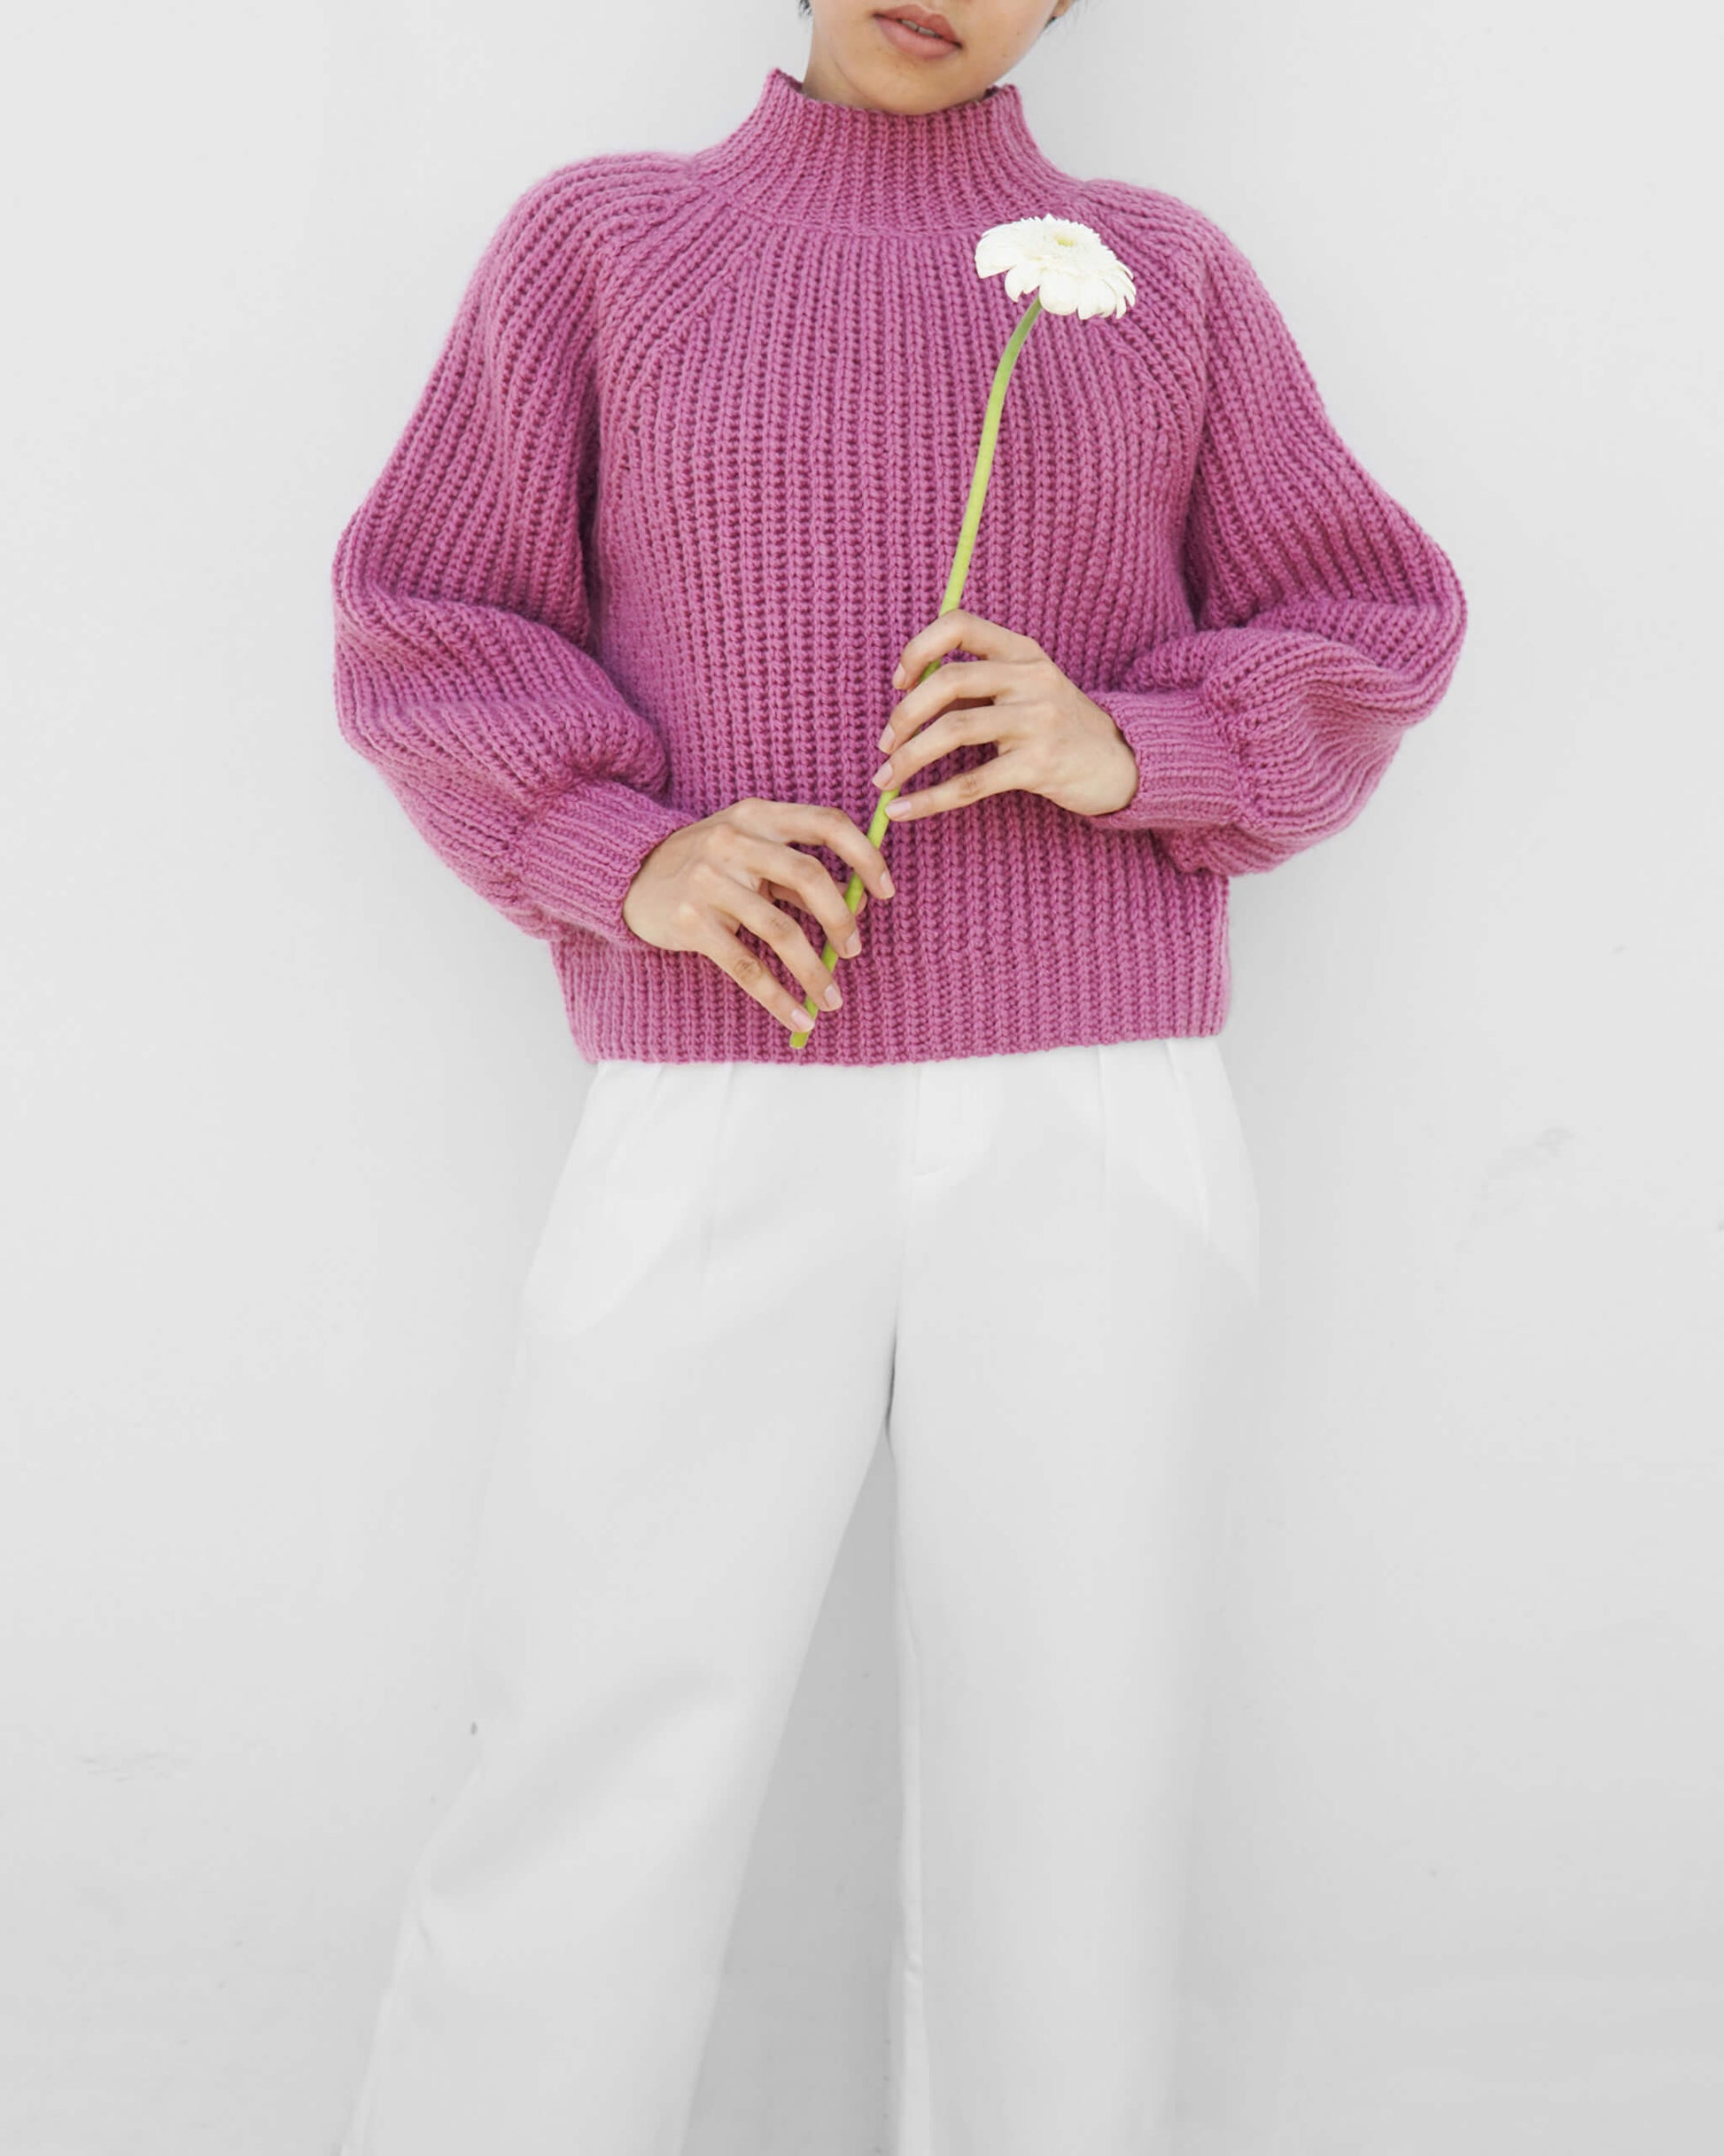 Ribbed raglan sweater crochet pattern